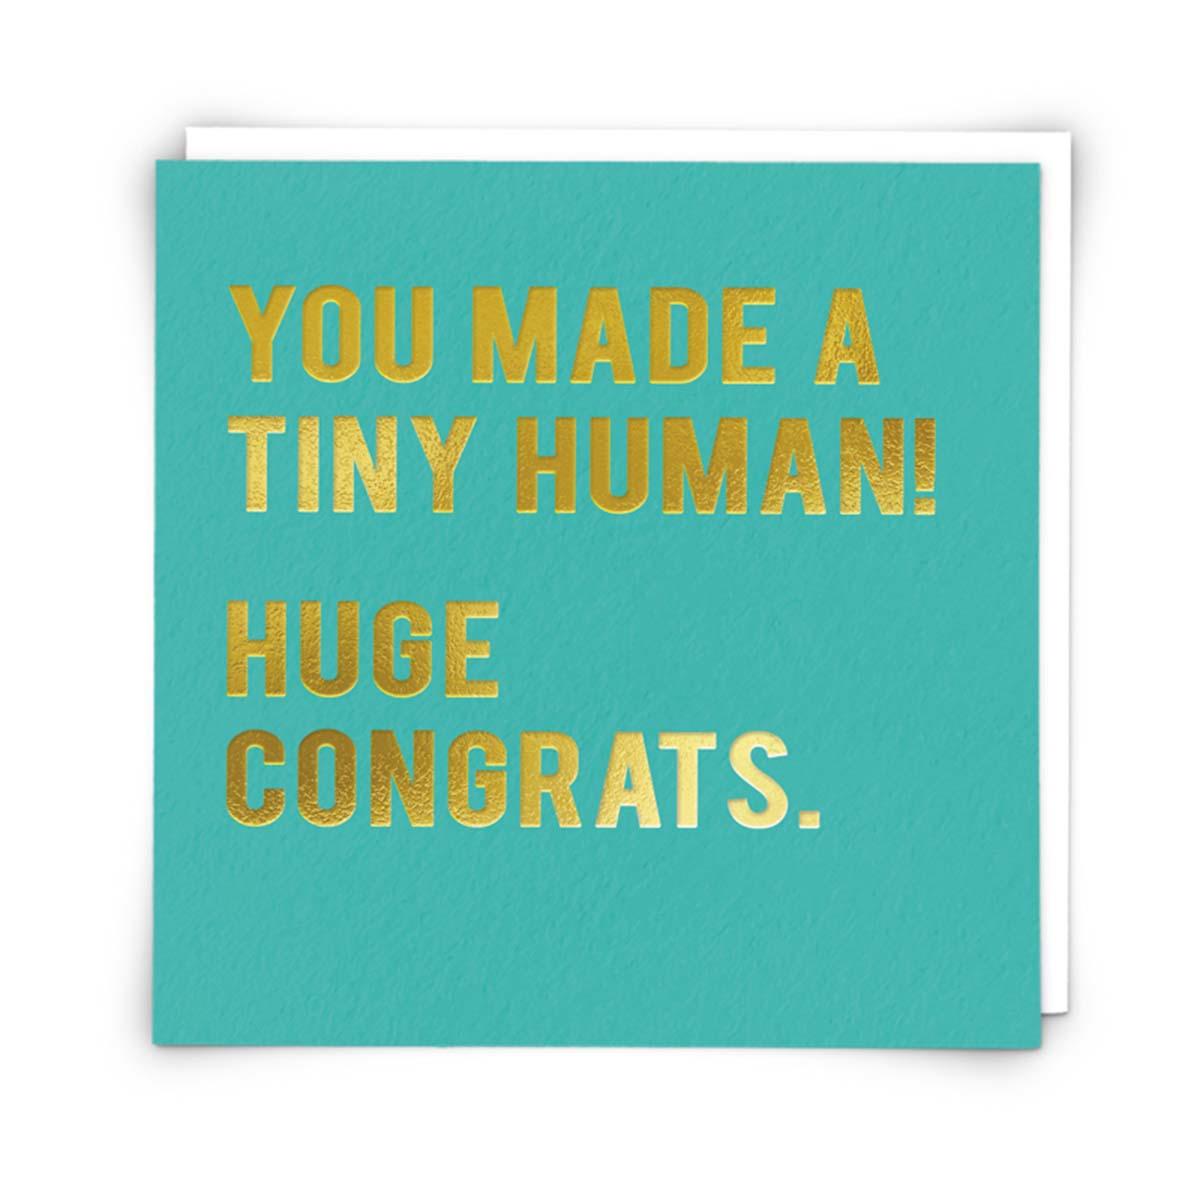 Tiny Human Card Front Image